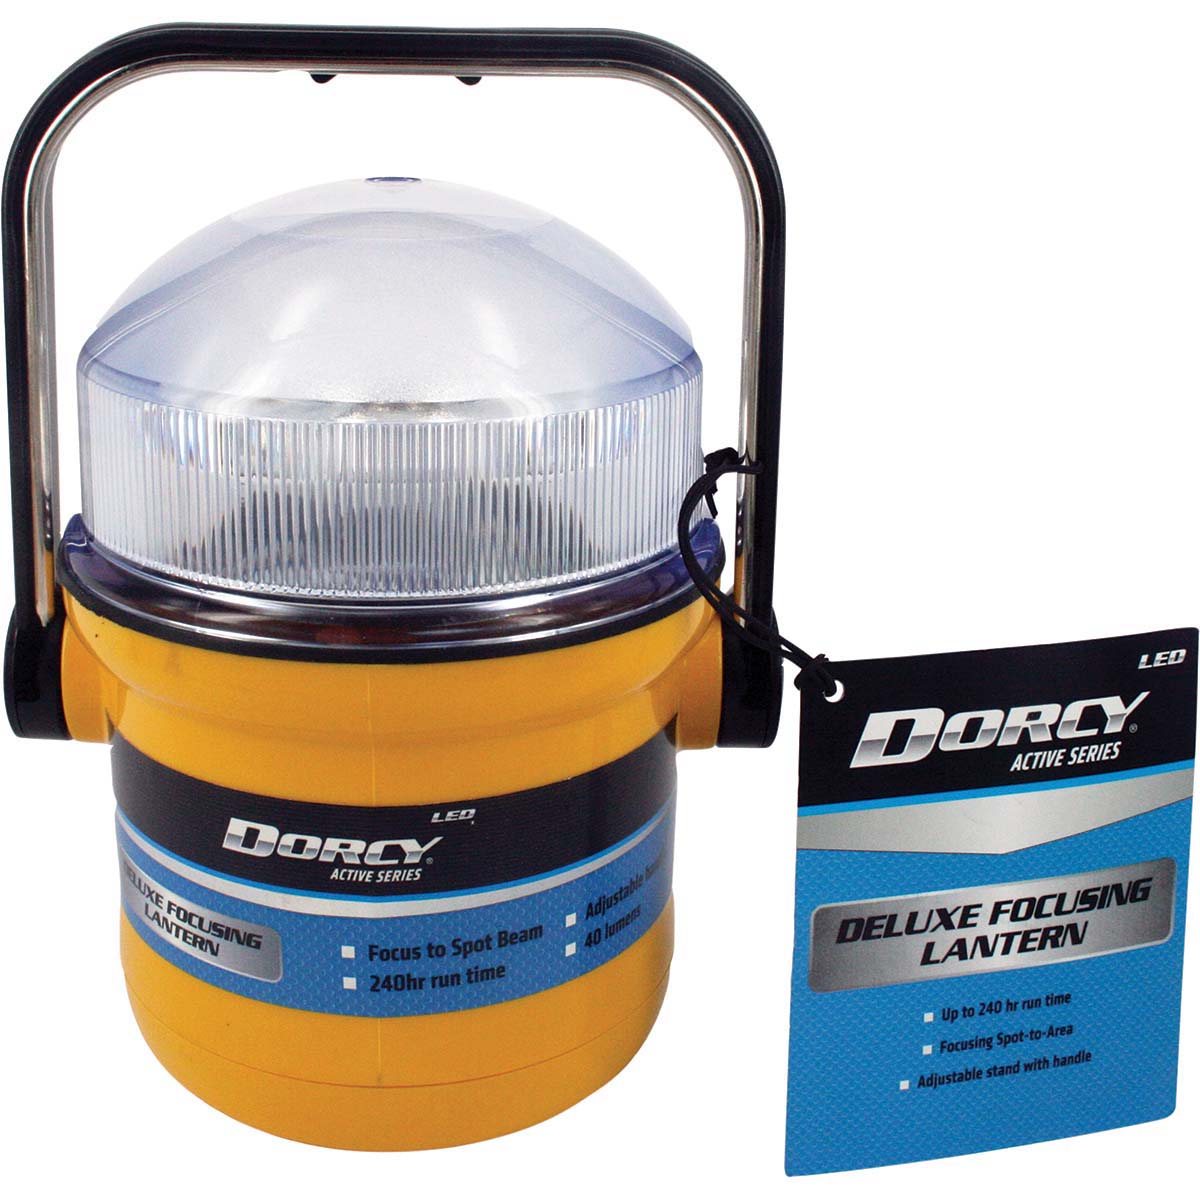 Dorcy Deluxe Focusing LED Lantern